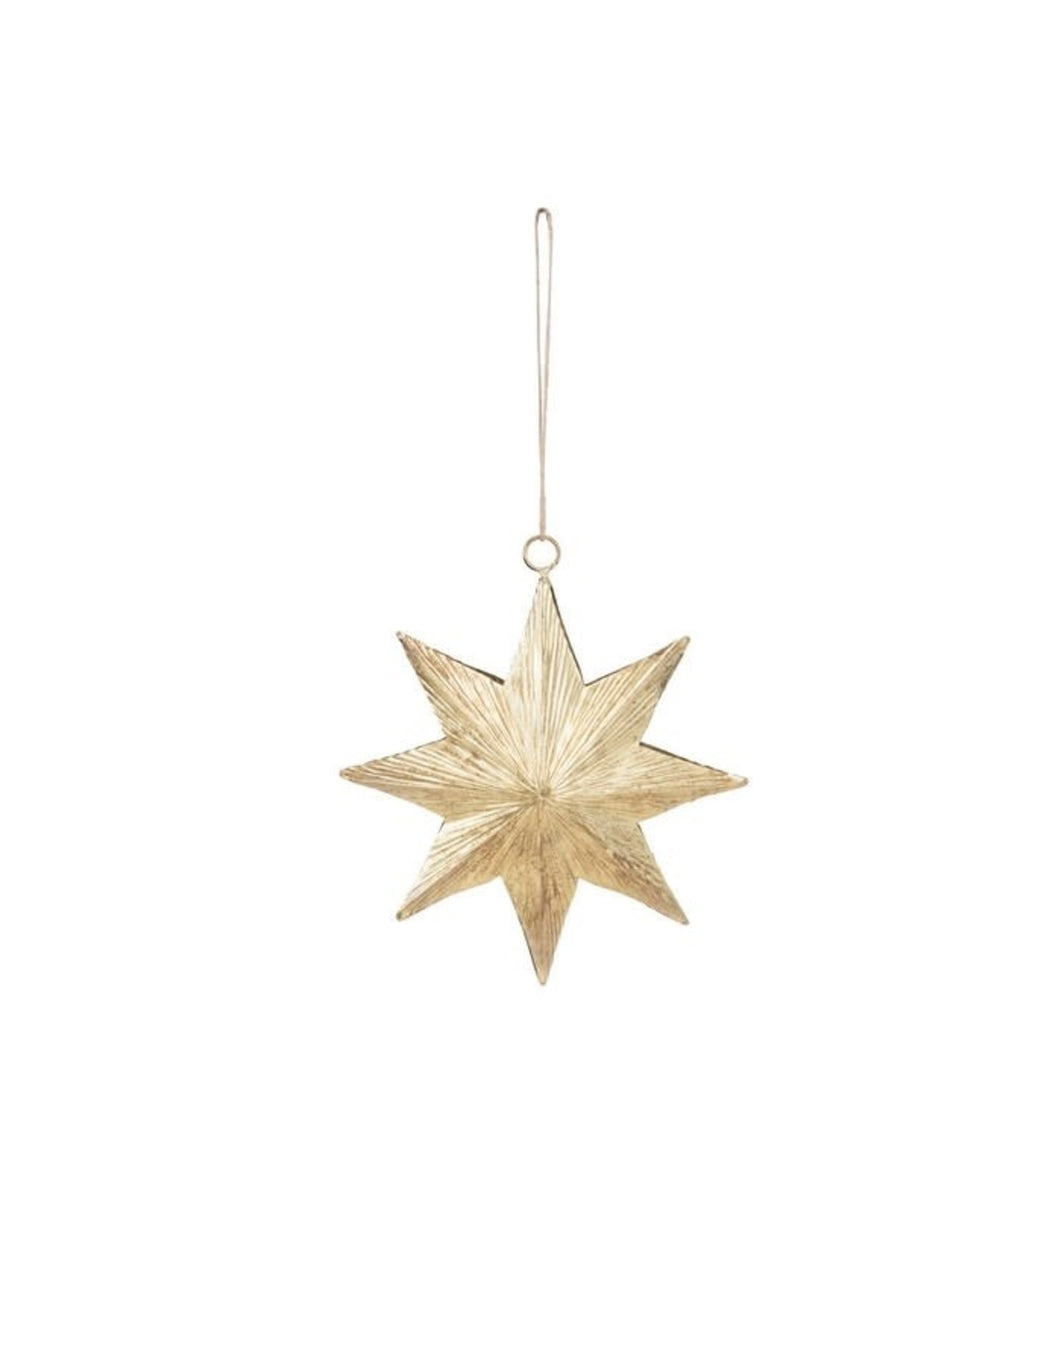 Antique Brass Star Ornament